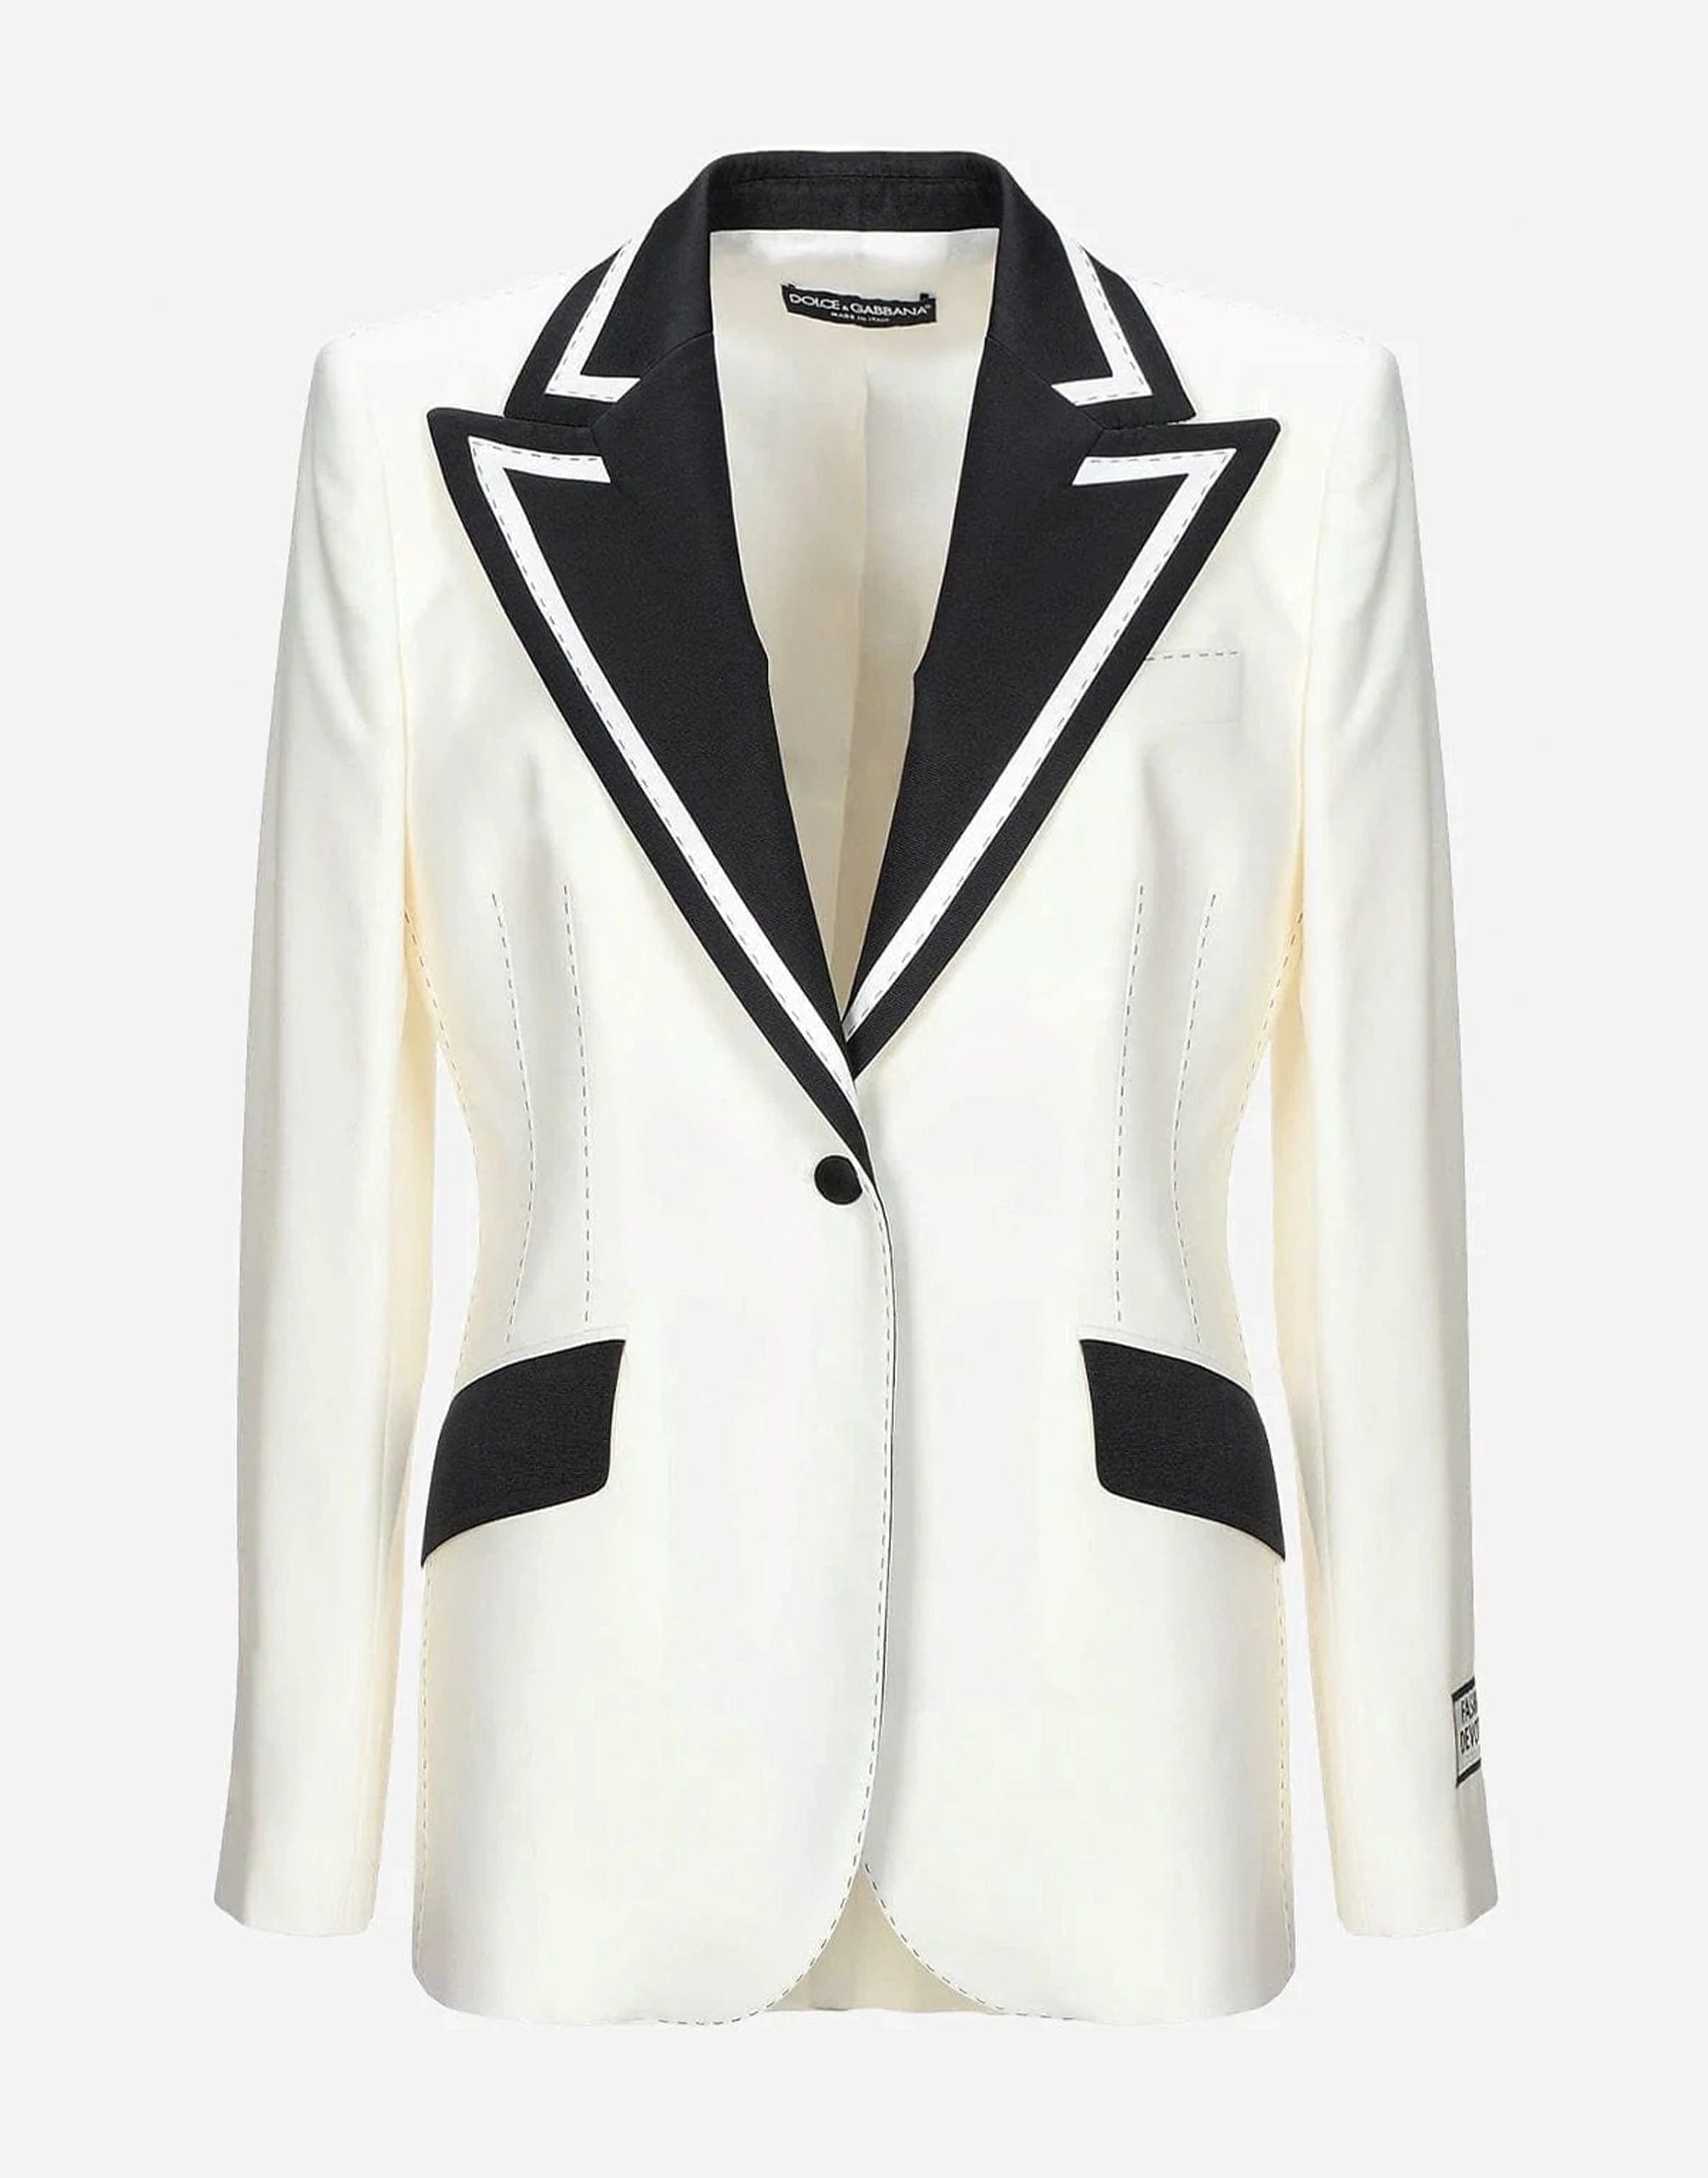 Dolce & Gabbana Monochrome Fashion Devotion Tux Blazer